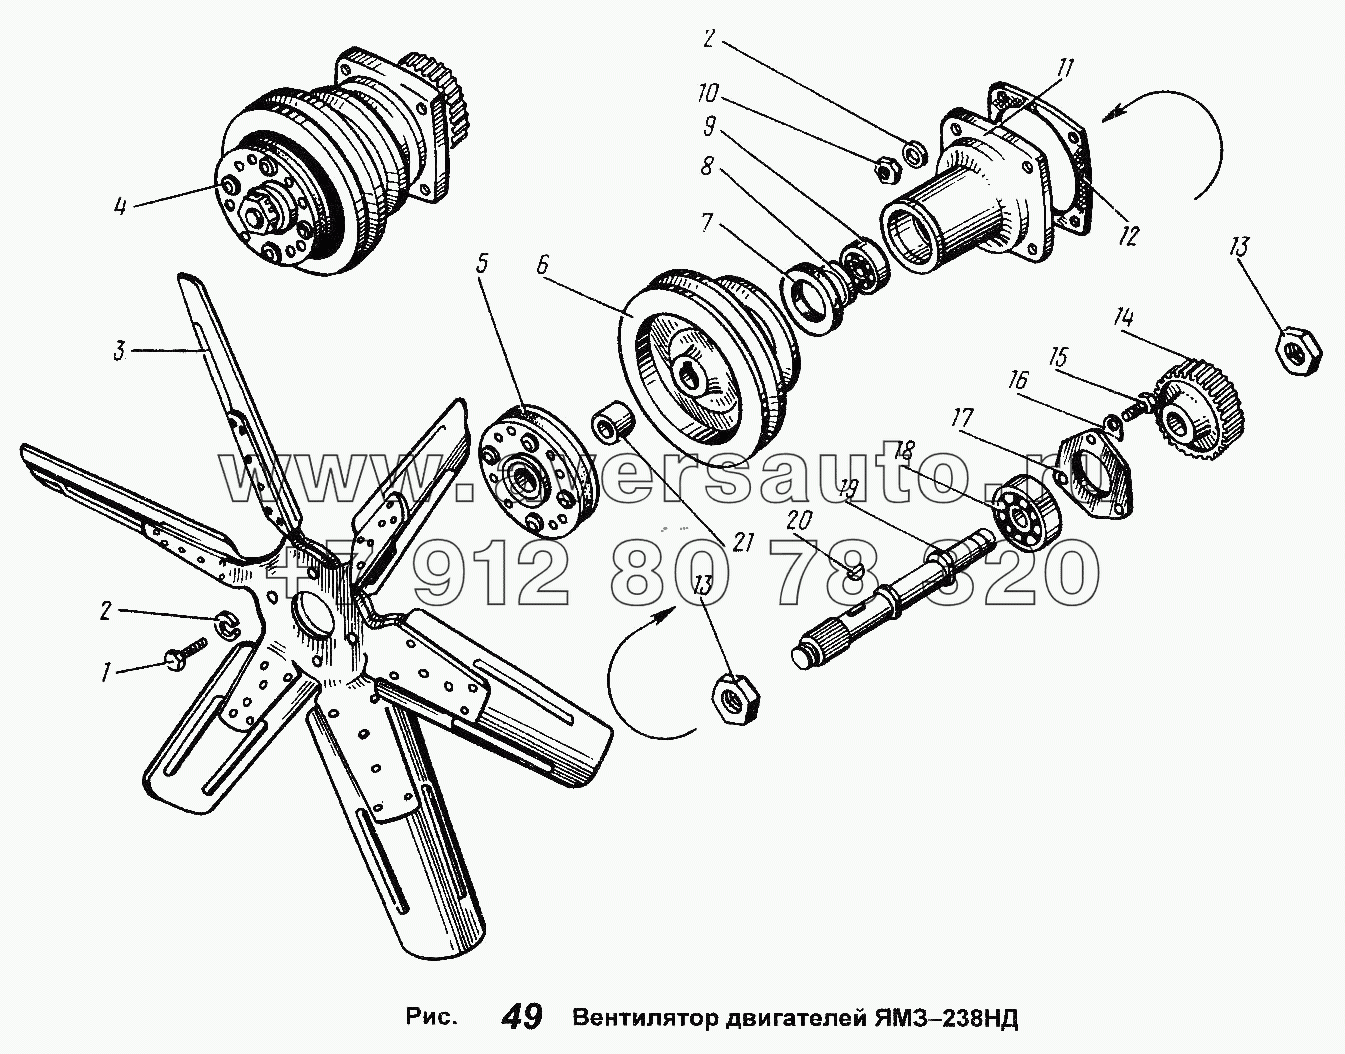 Вентилятор двигателя ЯМЗ-238НД